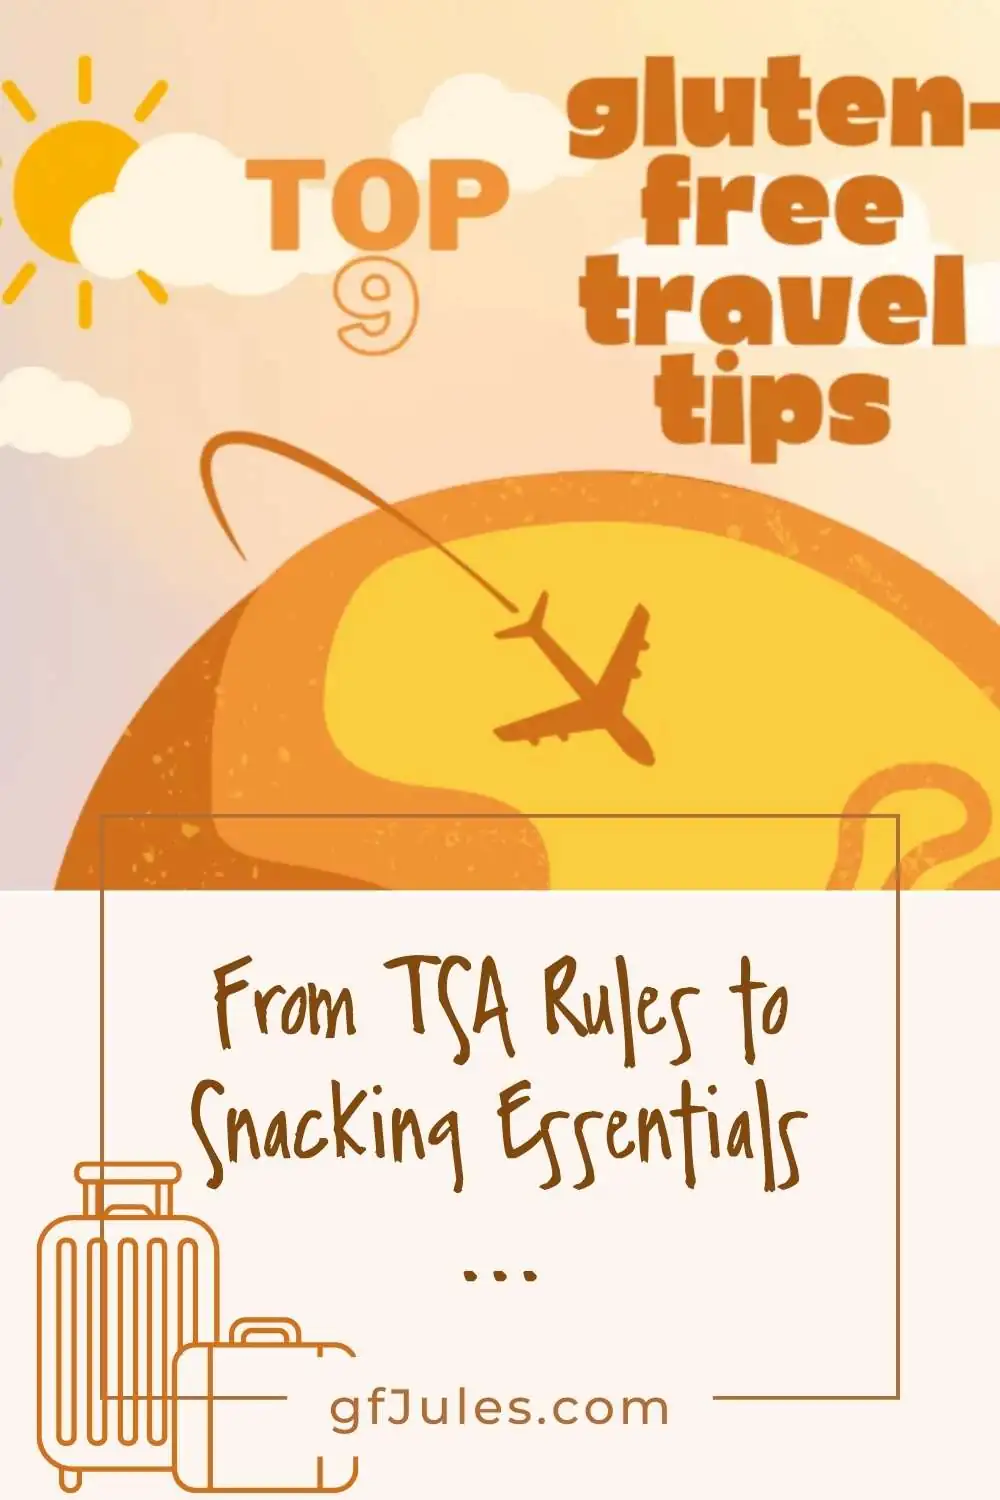 Top 9 Gluten Free Travel Tips